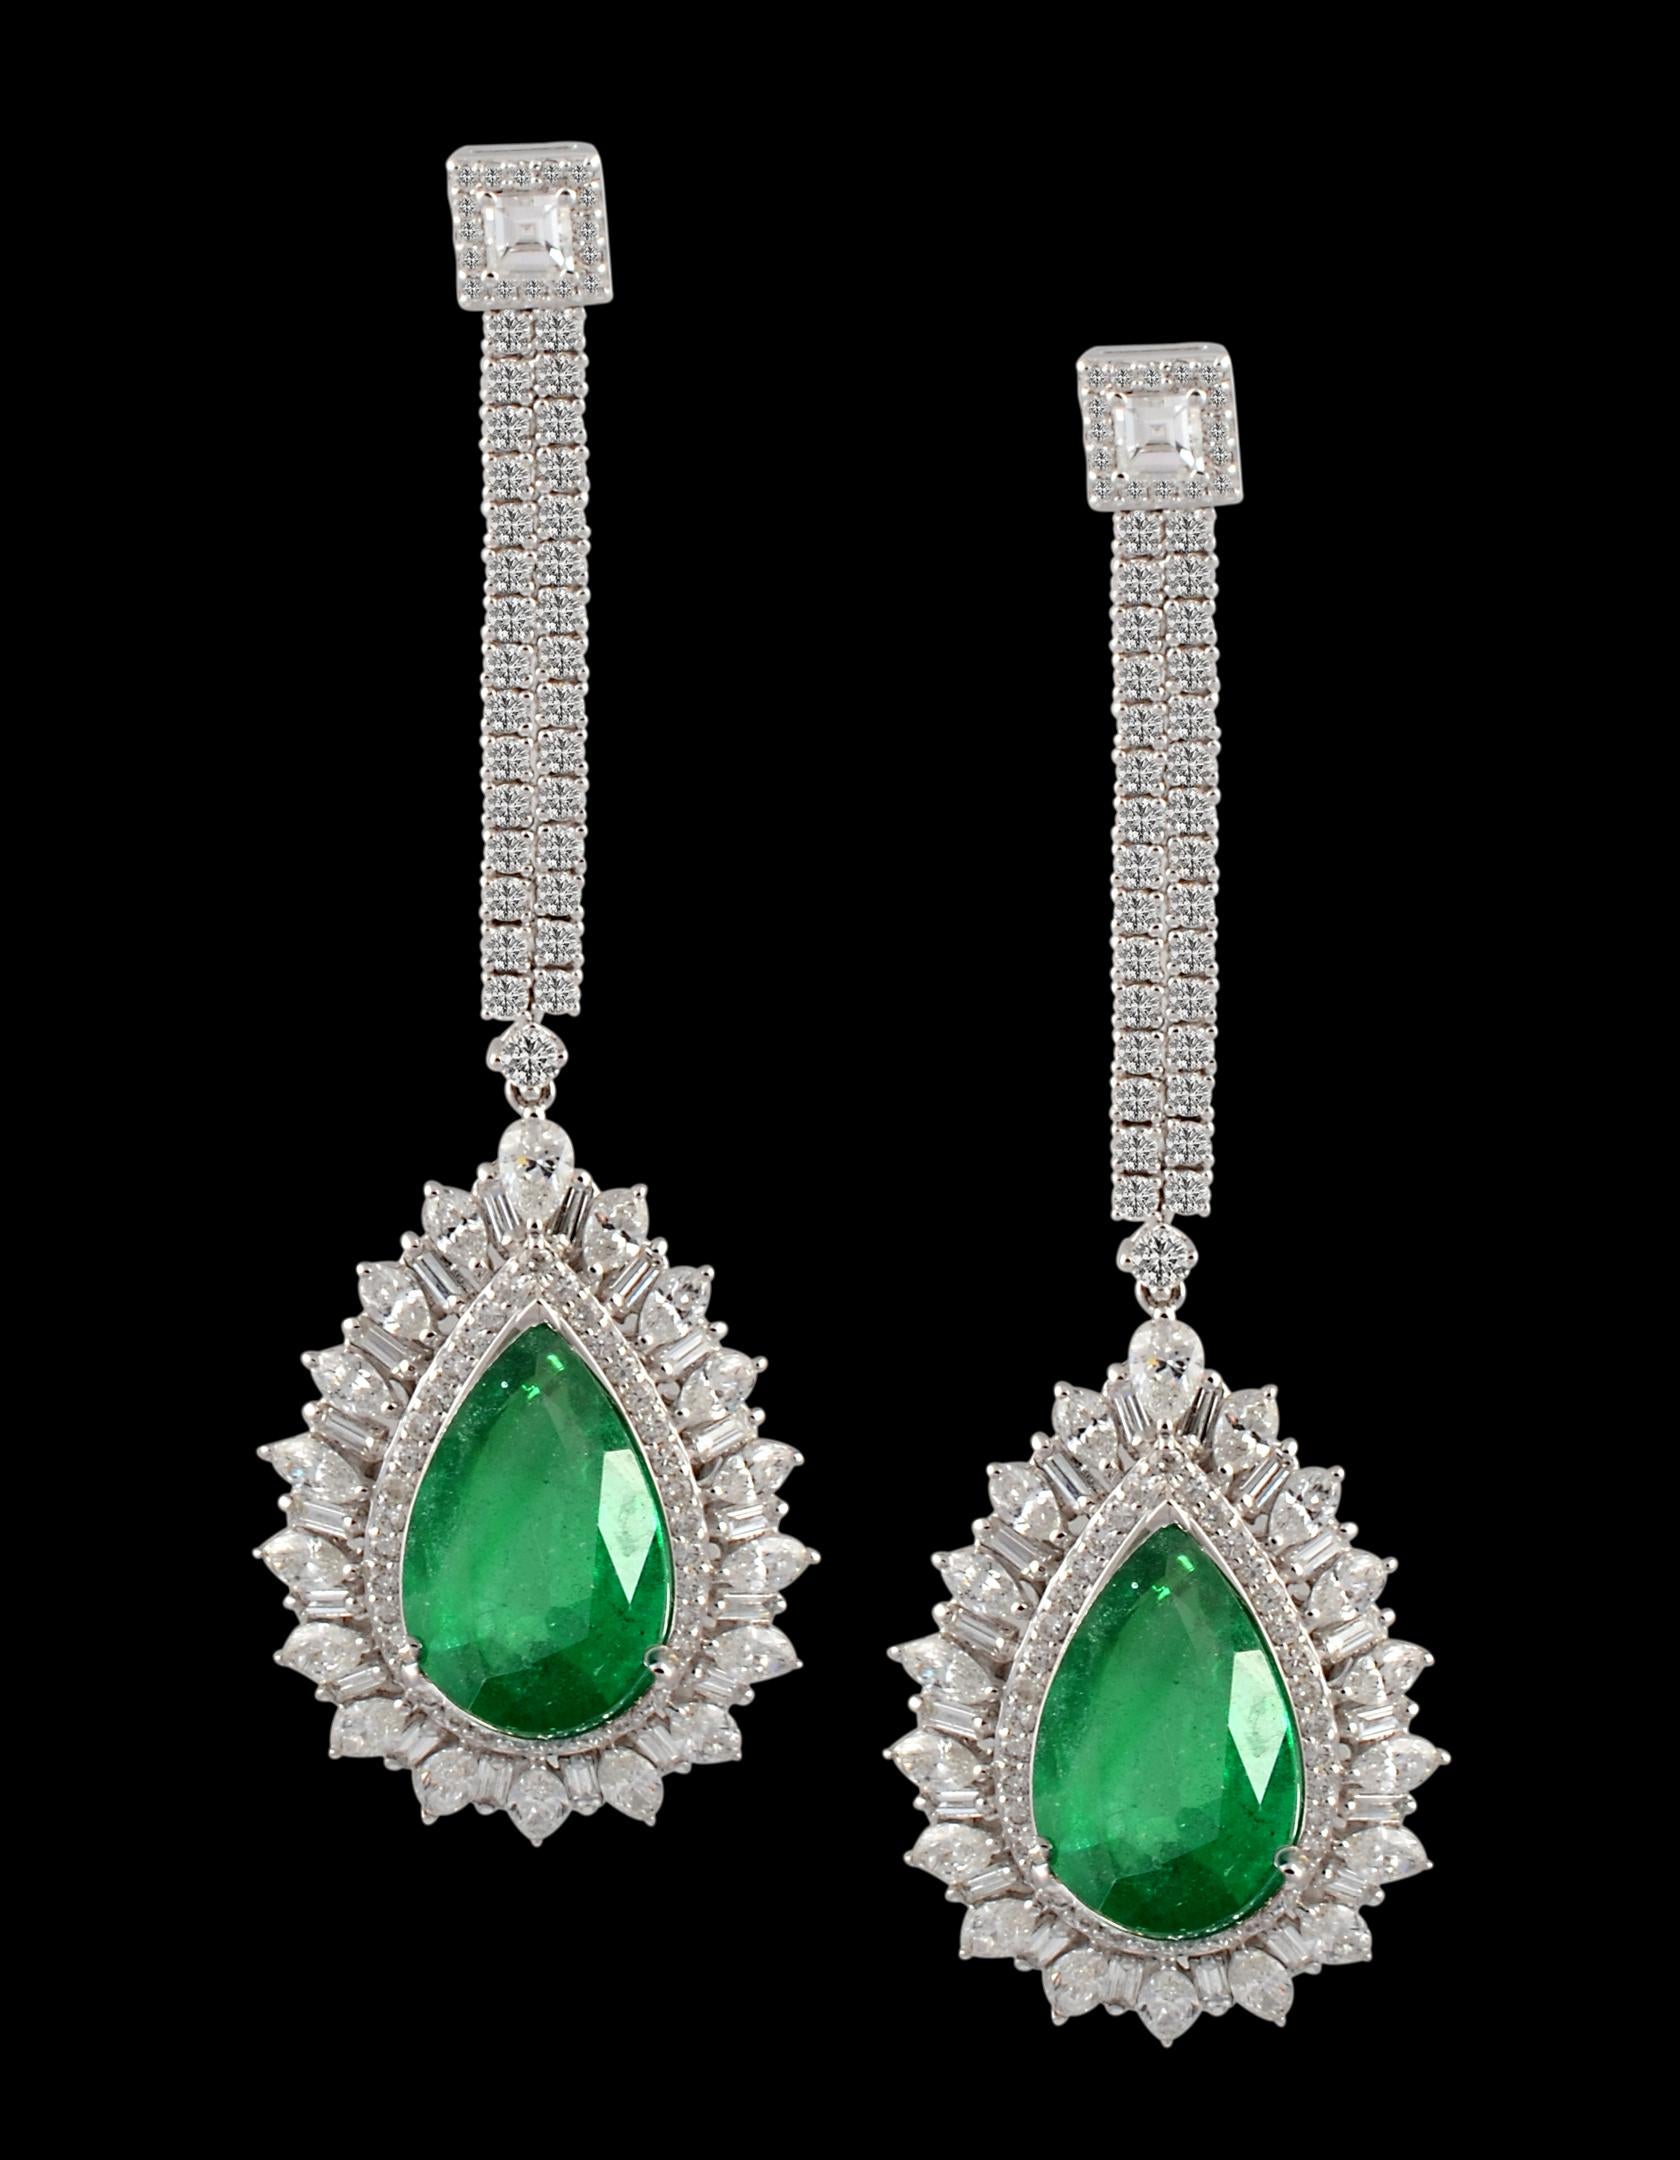 11 Ct Pear Shape Zambian Emerald & 6 Ct Diamonds Drop Earrings 18K White Gold 1